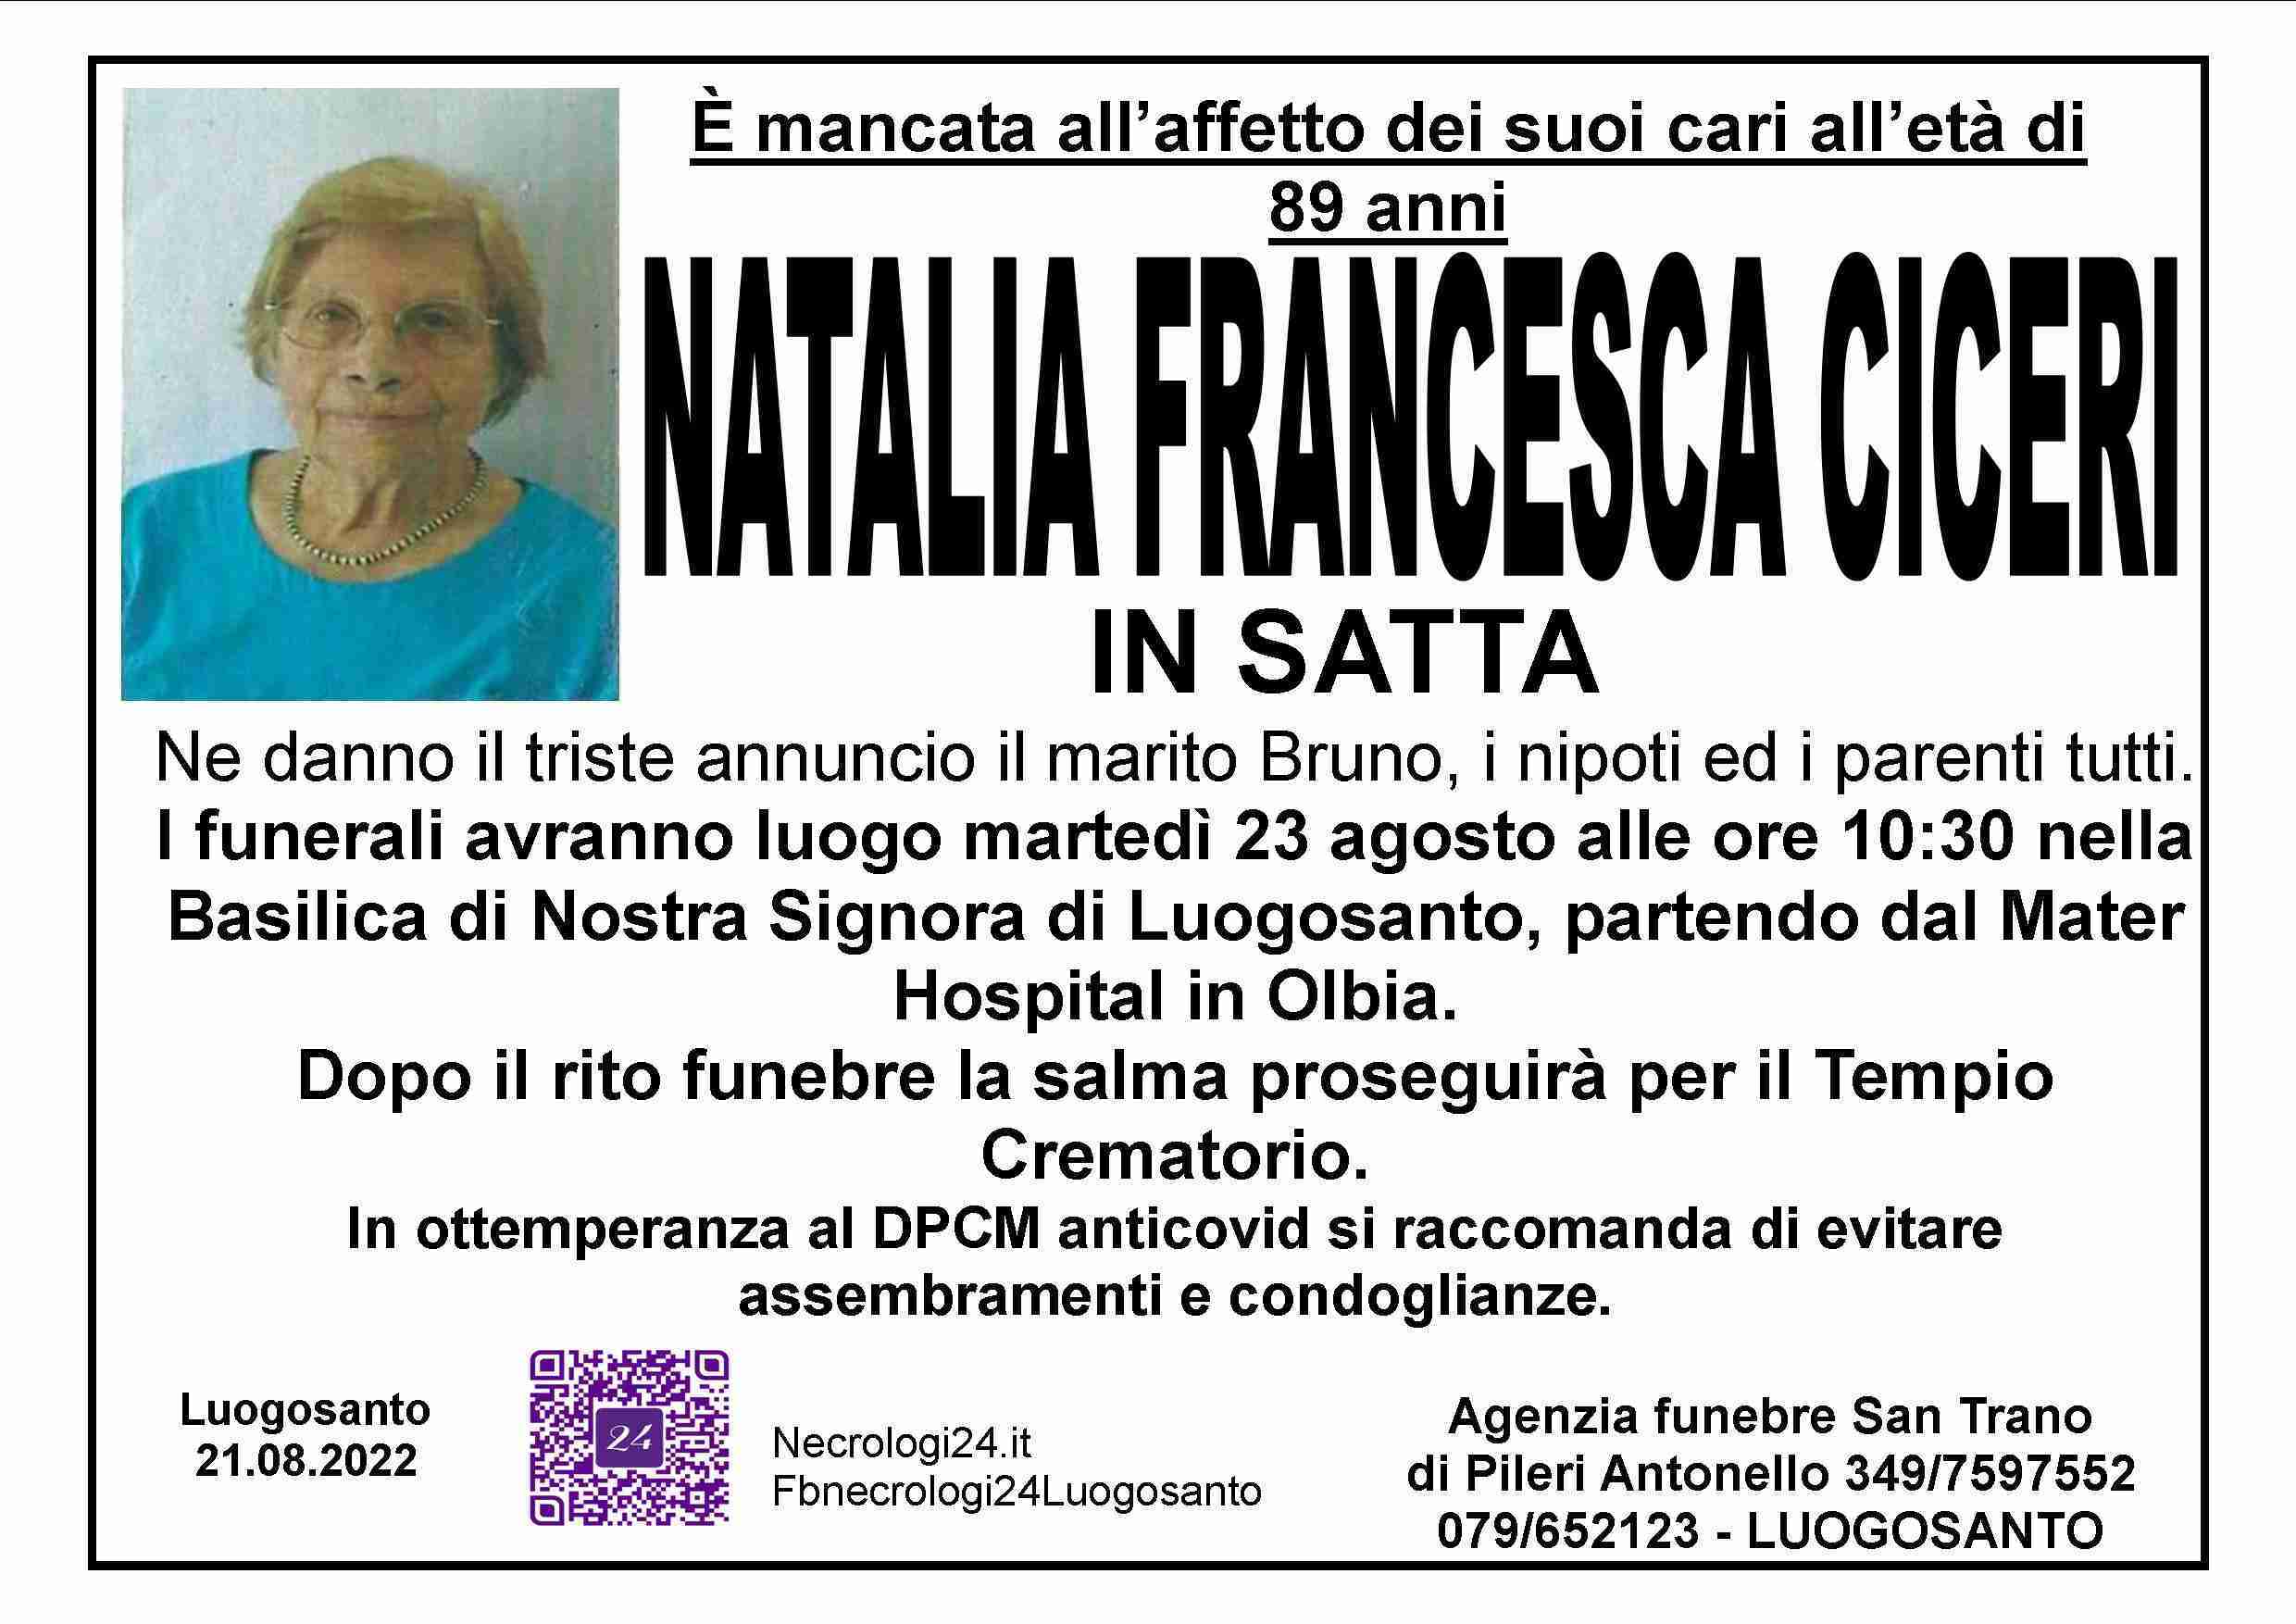 Natalia Francesca Ciceri